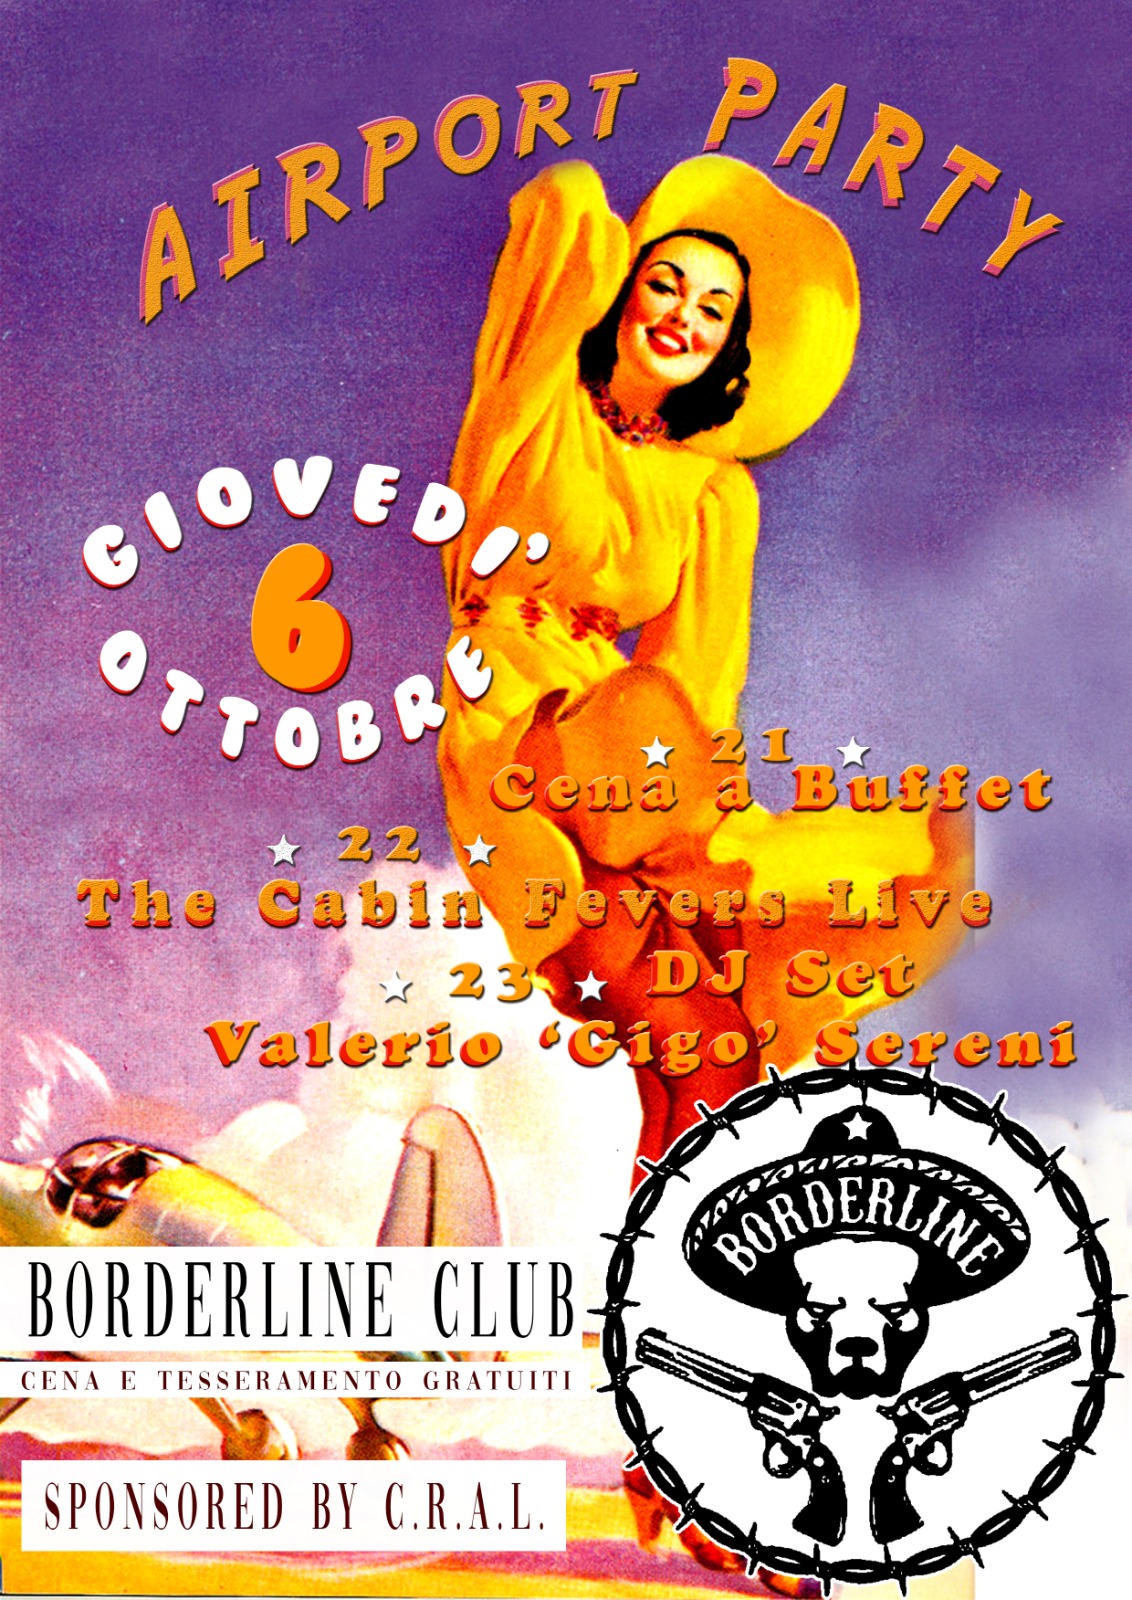 Borderline Club Pisa - Thursday Dance Party with Gigo DJ - New Season